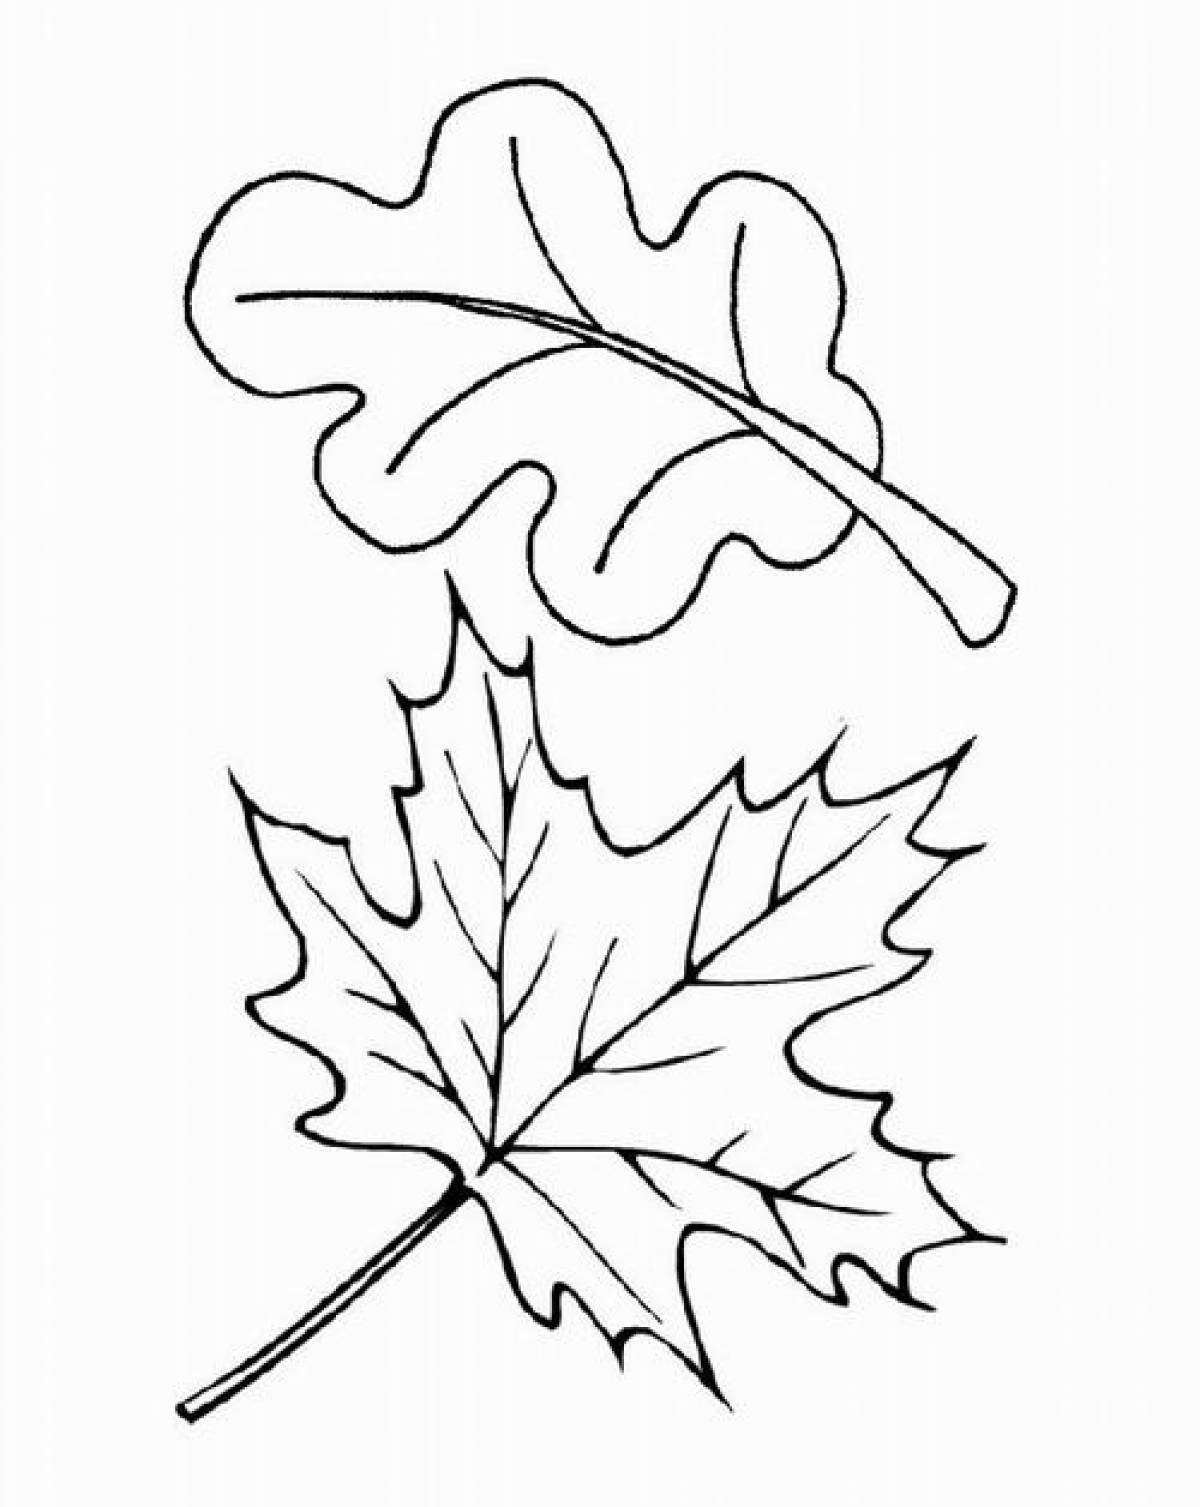 Maple leaf and oak